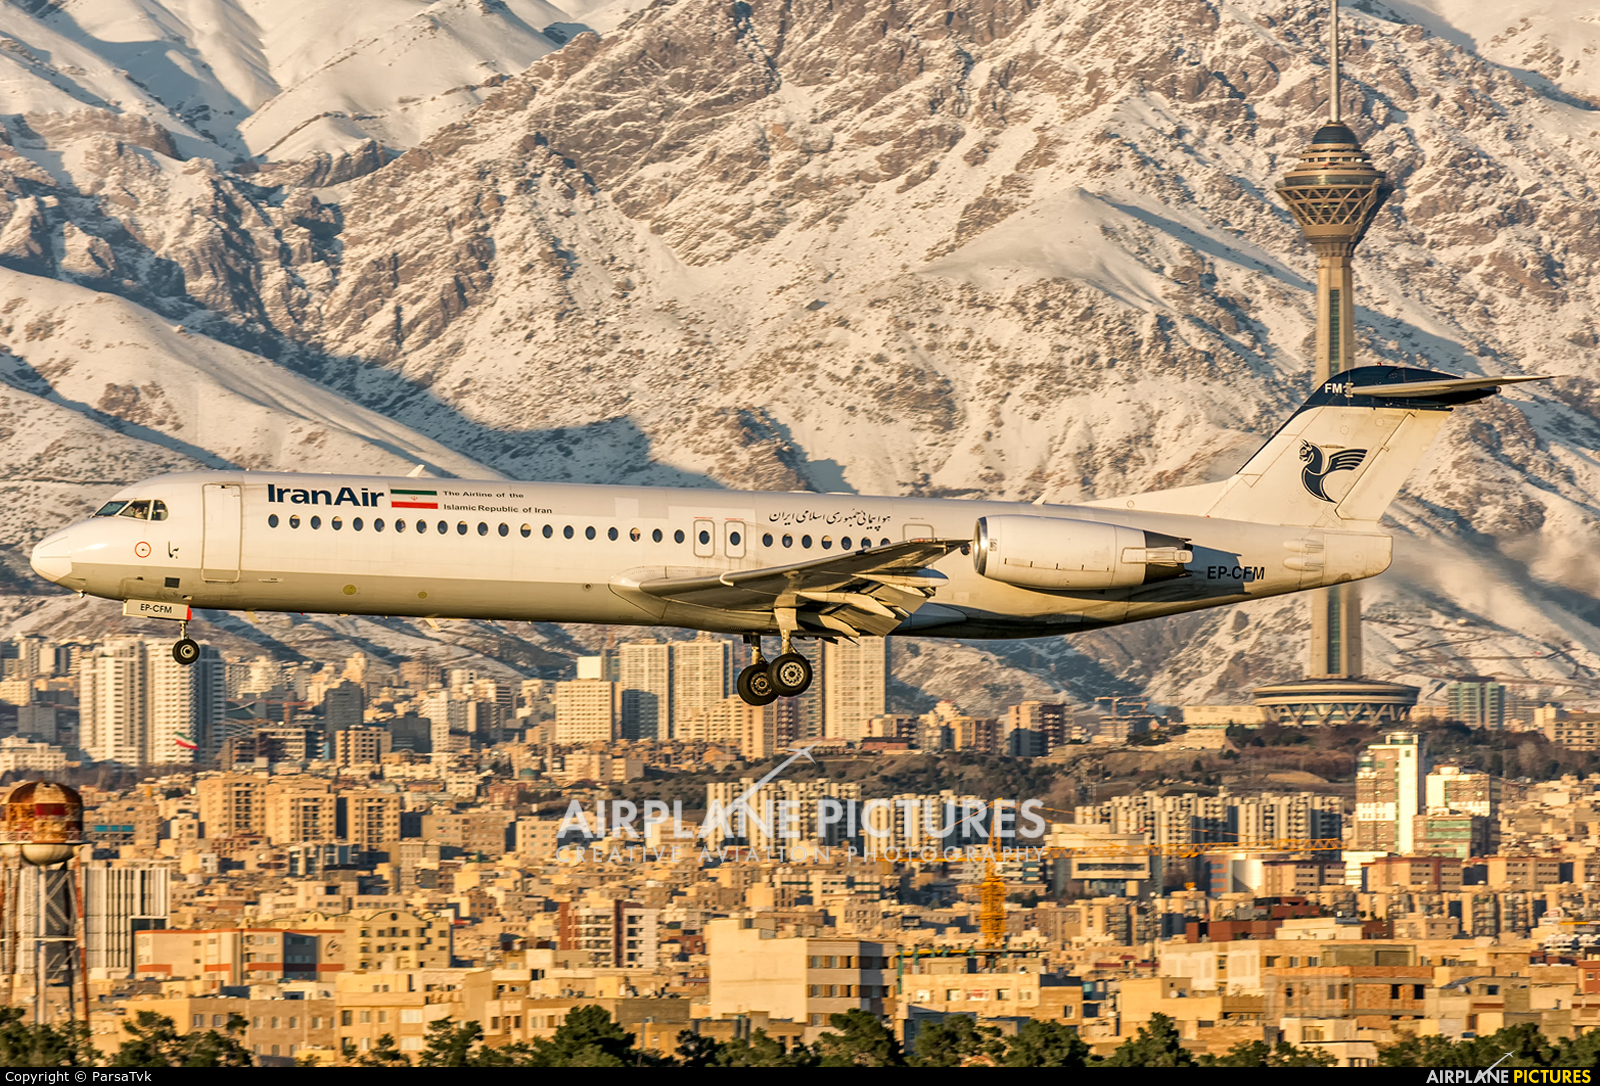 Iran Air EP-CFM aircraft at Tehran - Mehrabad Intl